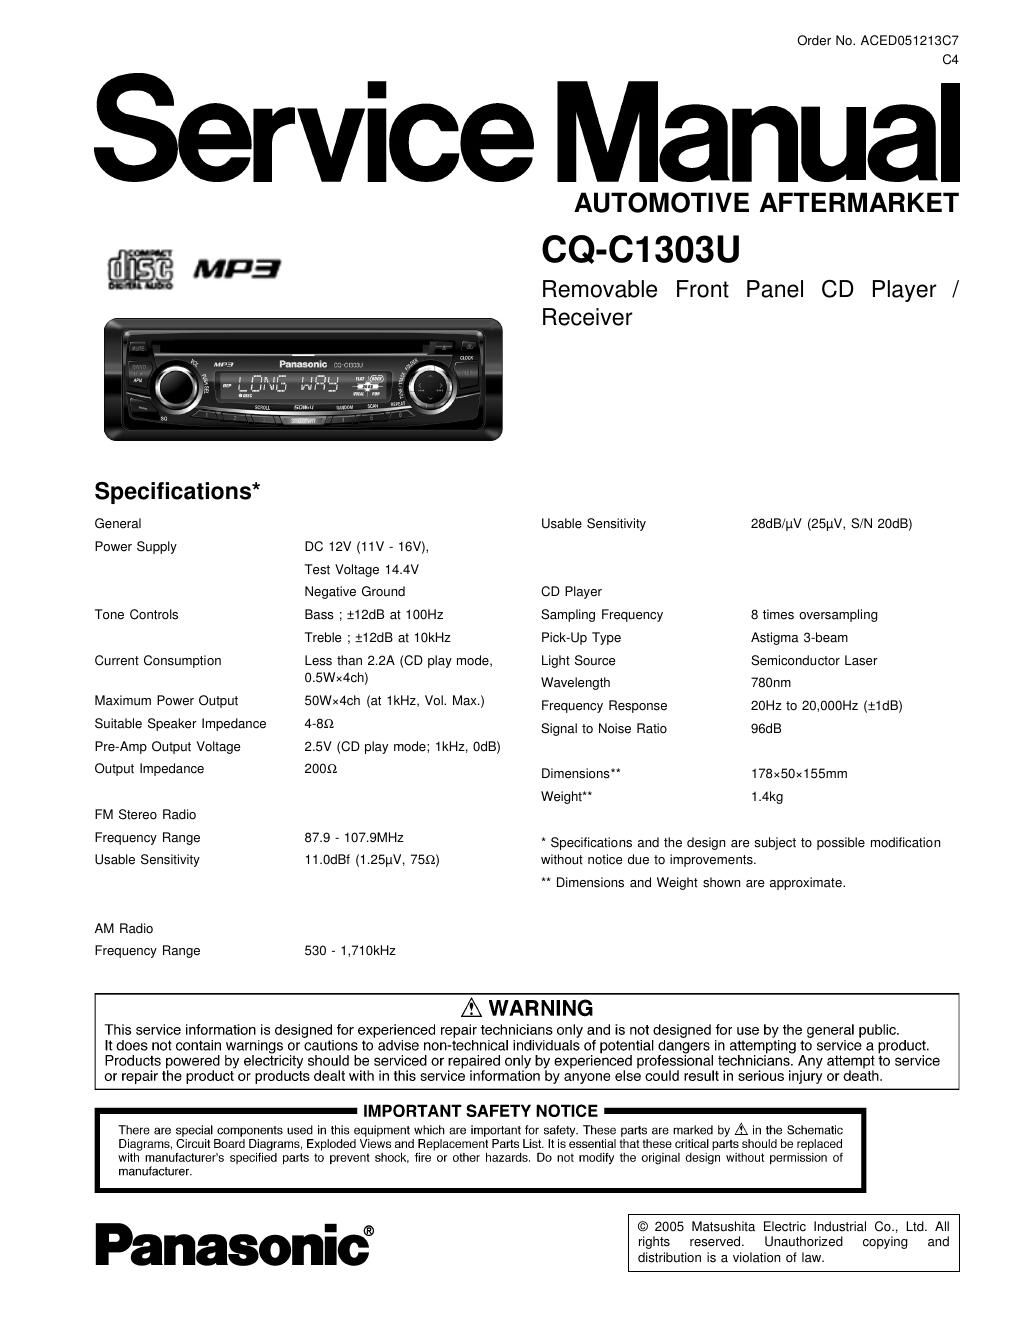 panasonic cq c 1303 u service manual